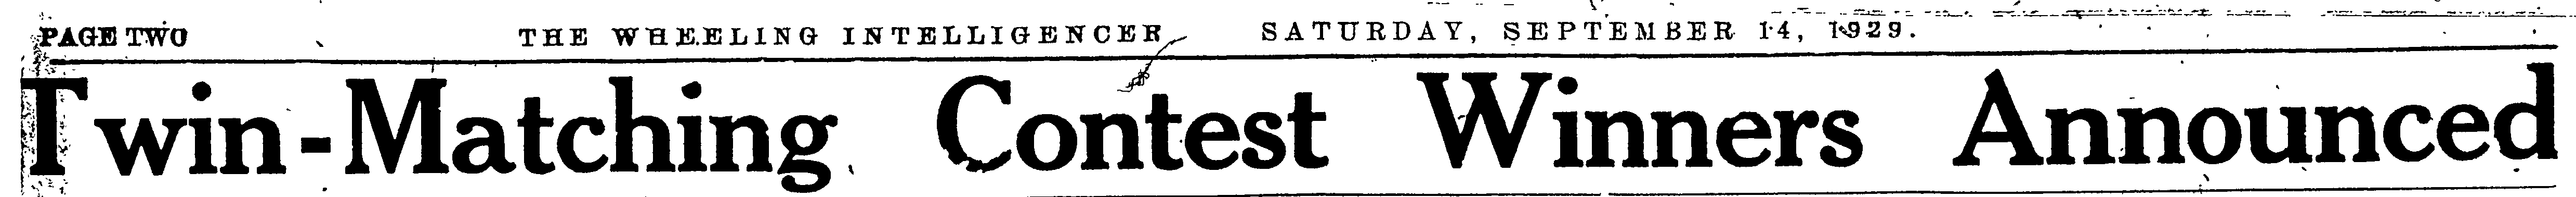 Twin-Matching Contest Headline, 1929